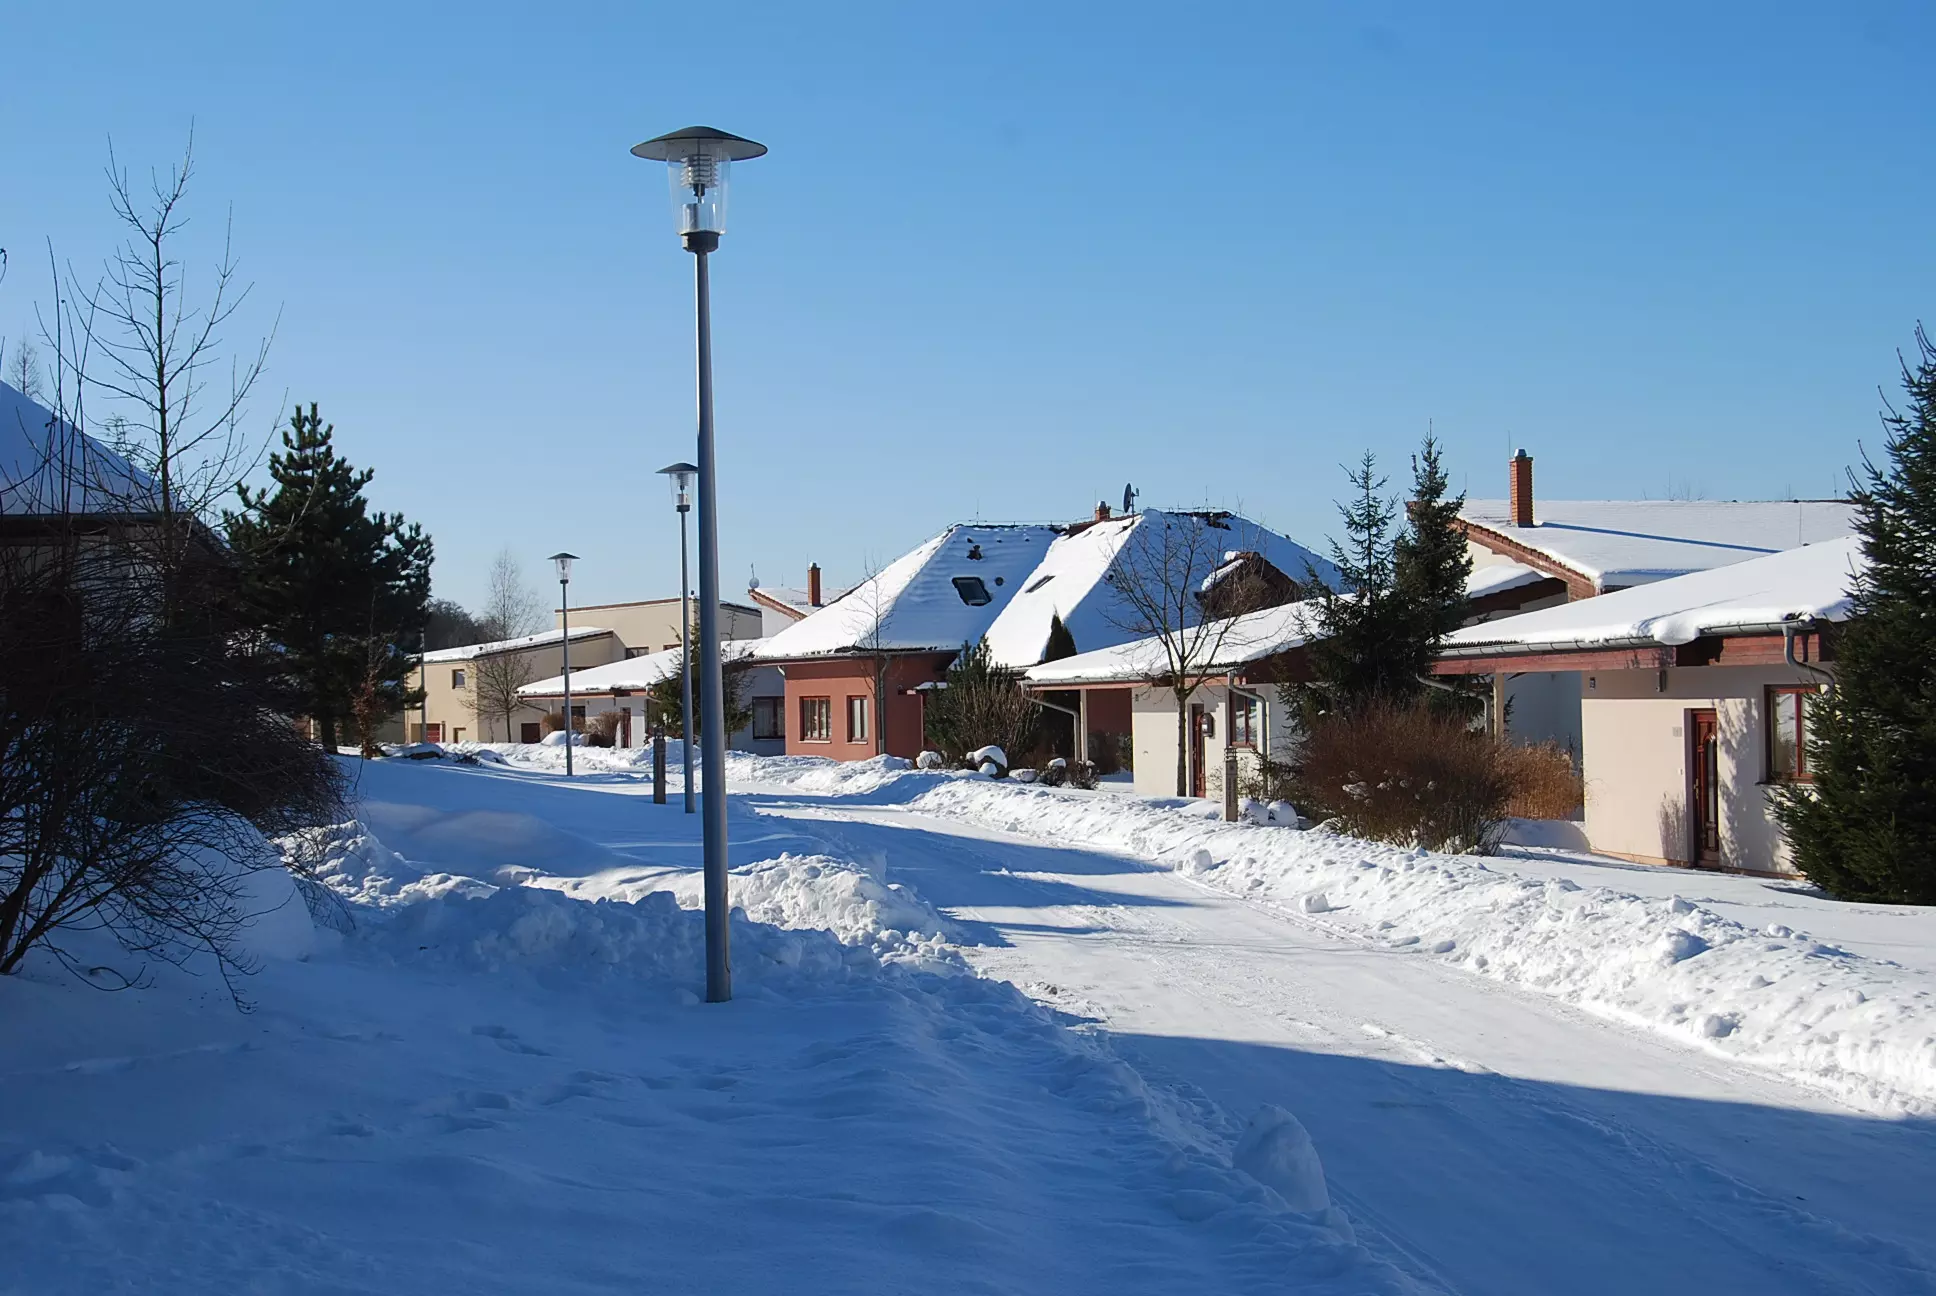 Winter, straatje, huis te koop, Tsjechie.